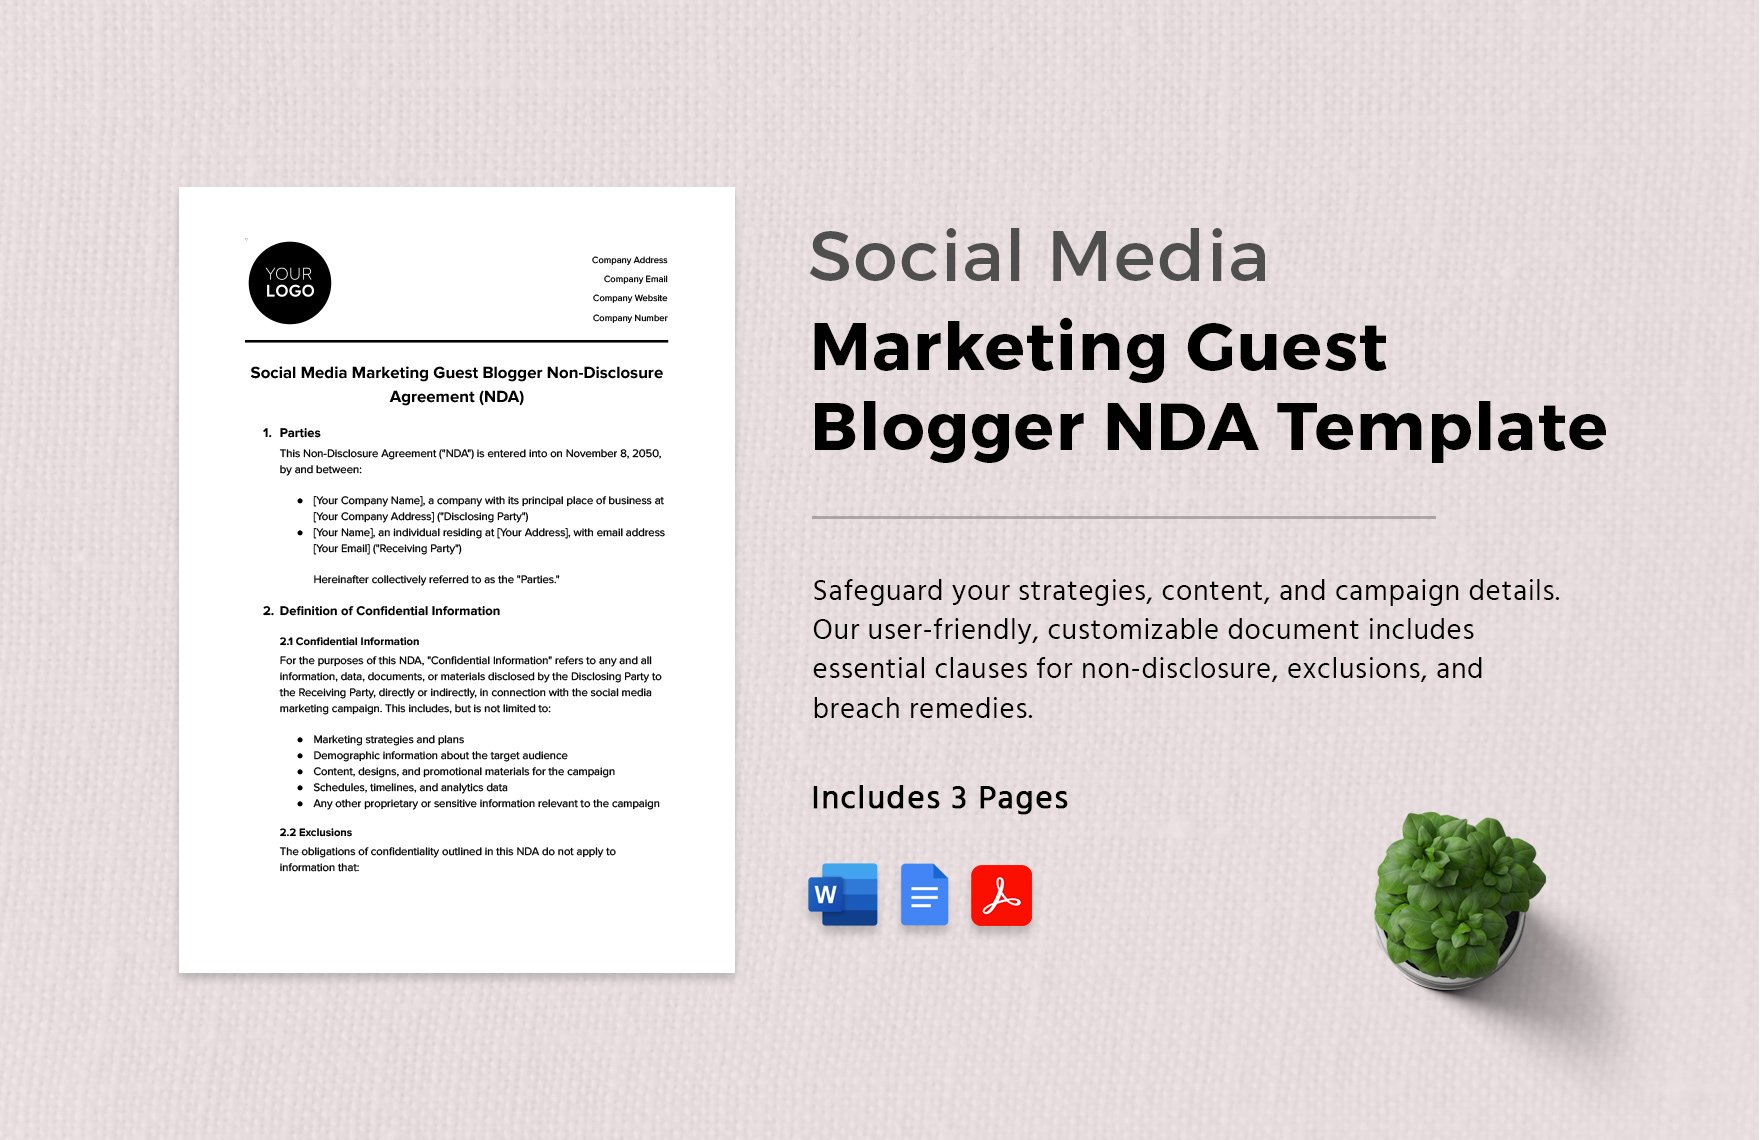 Social Media Marketing Guest Blogger NDA Template